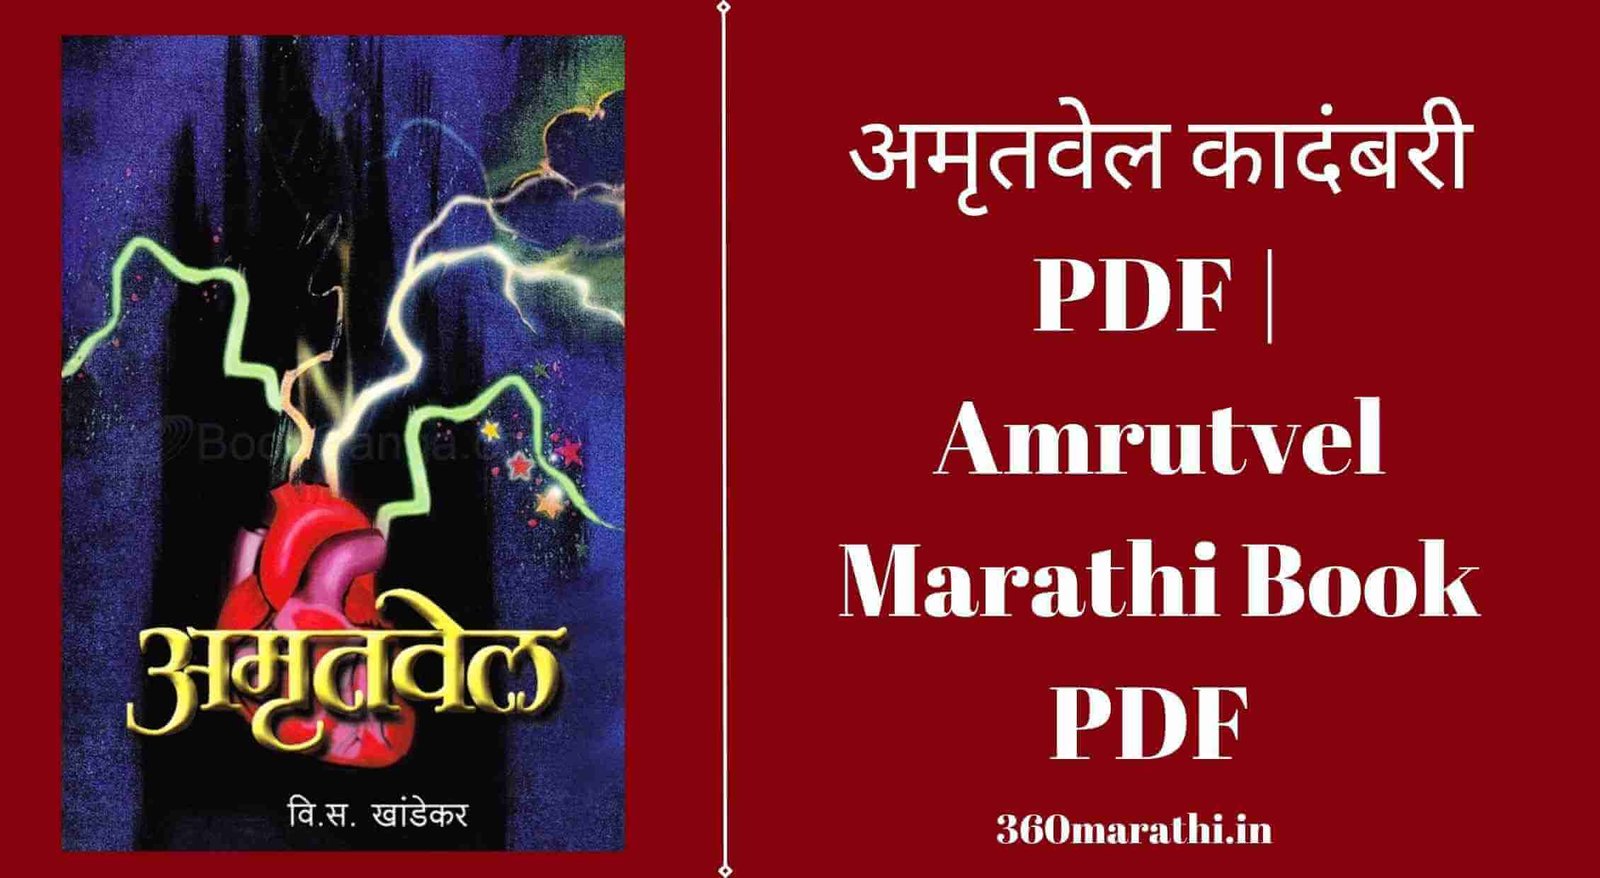 अमृतवेल कादंबरी PDF | Amrutvel Marathi Book PDF Free Download